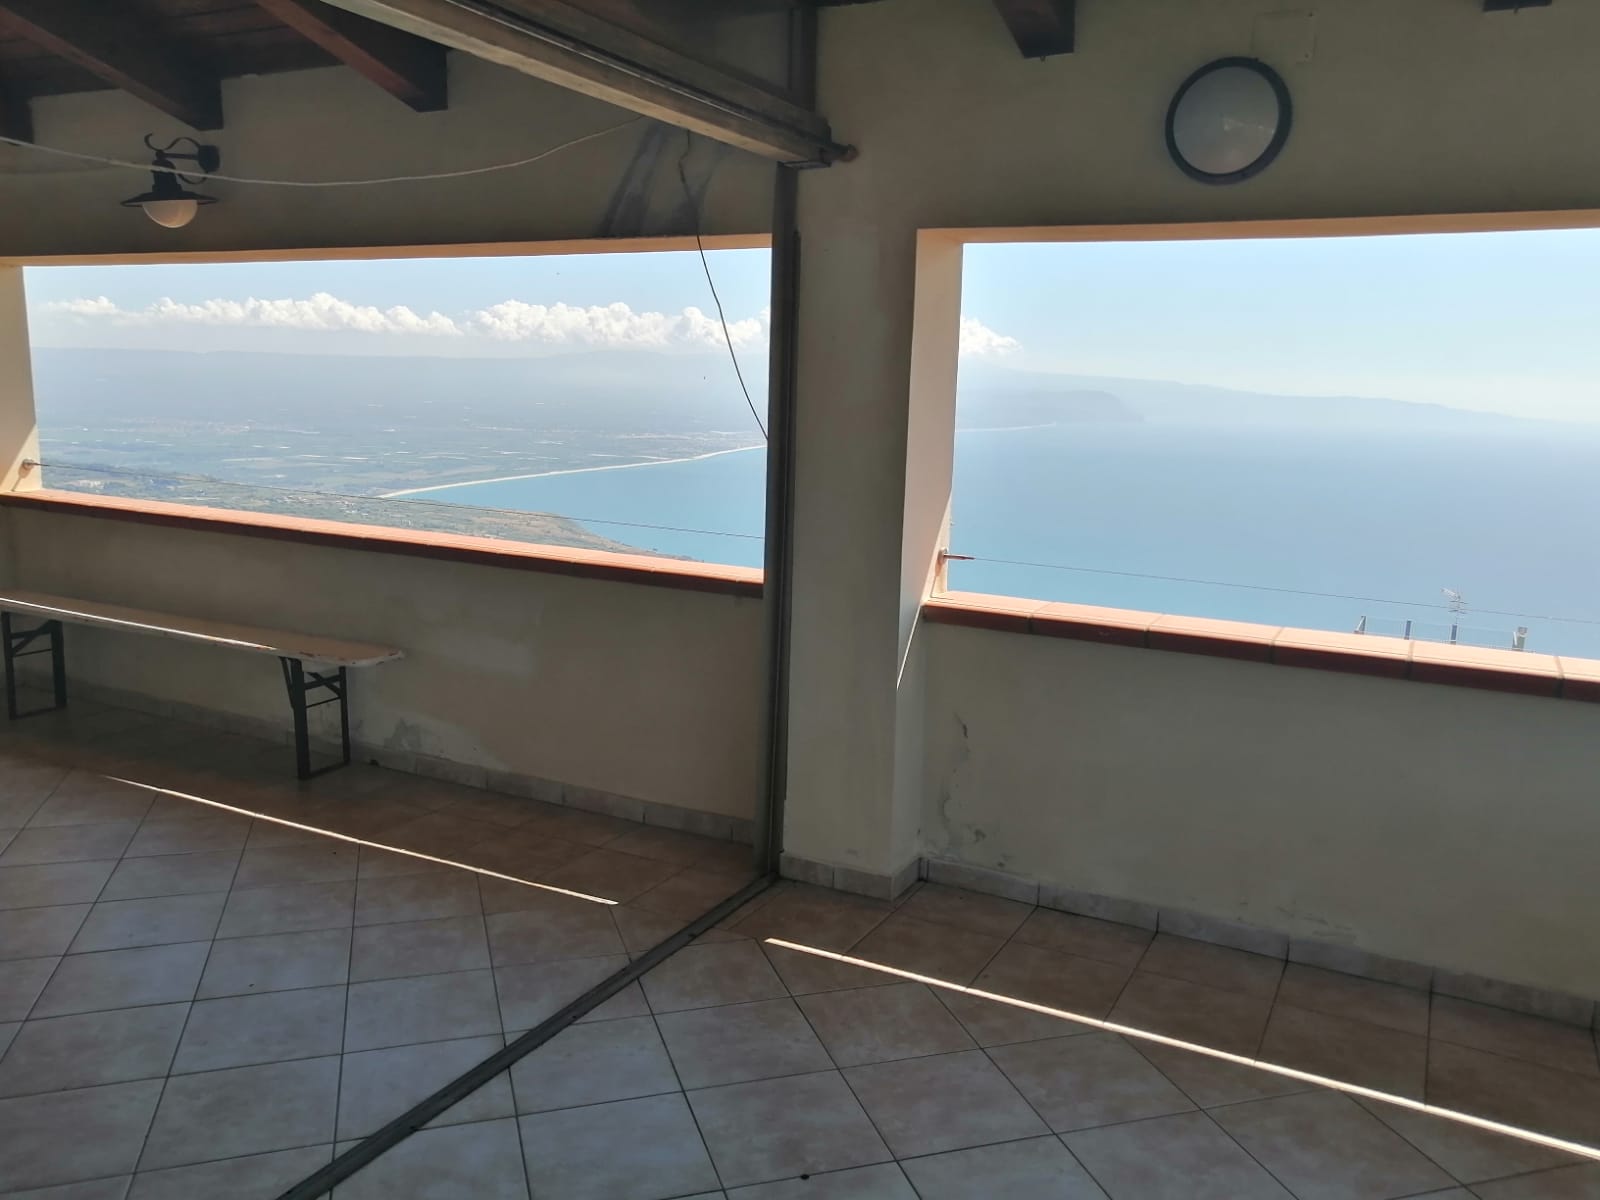 Villa with sea view in Calabria for Sale